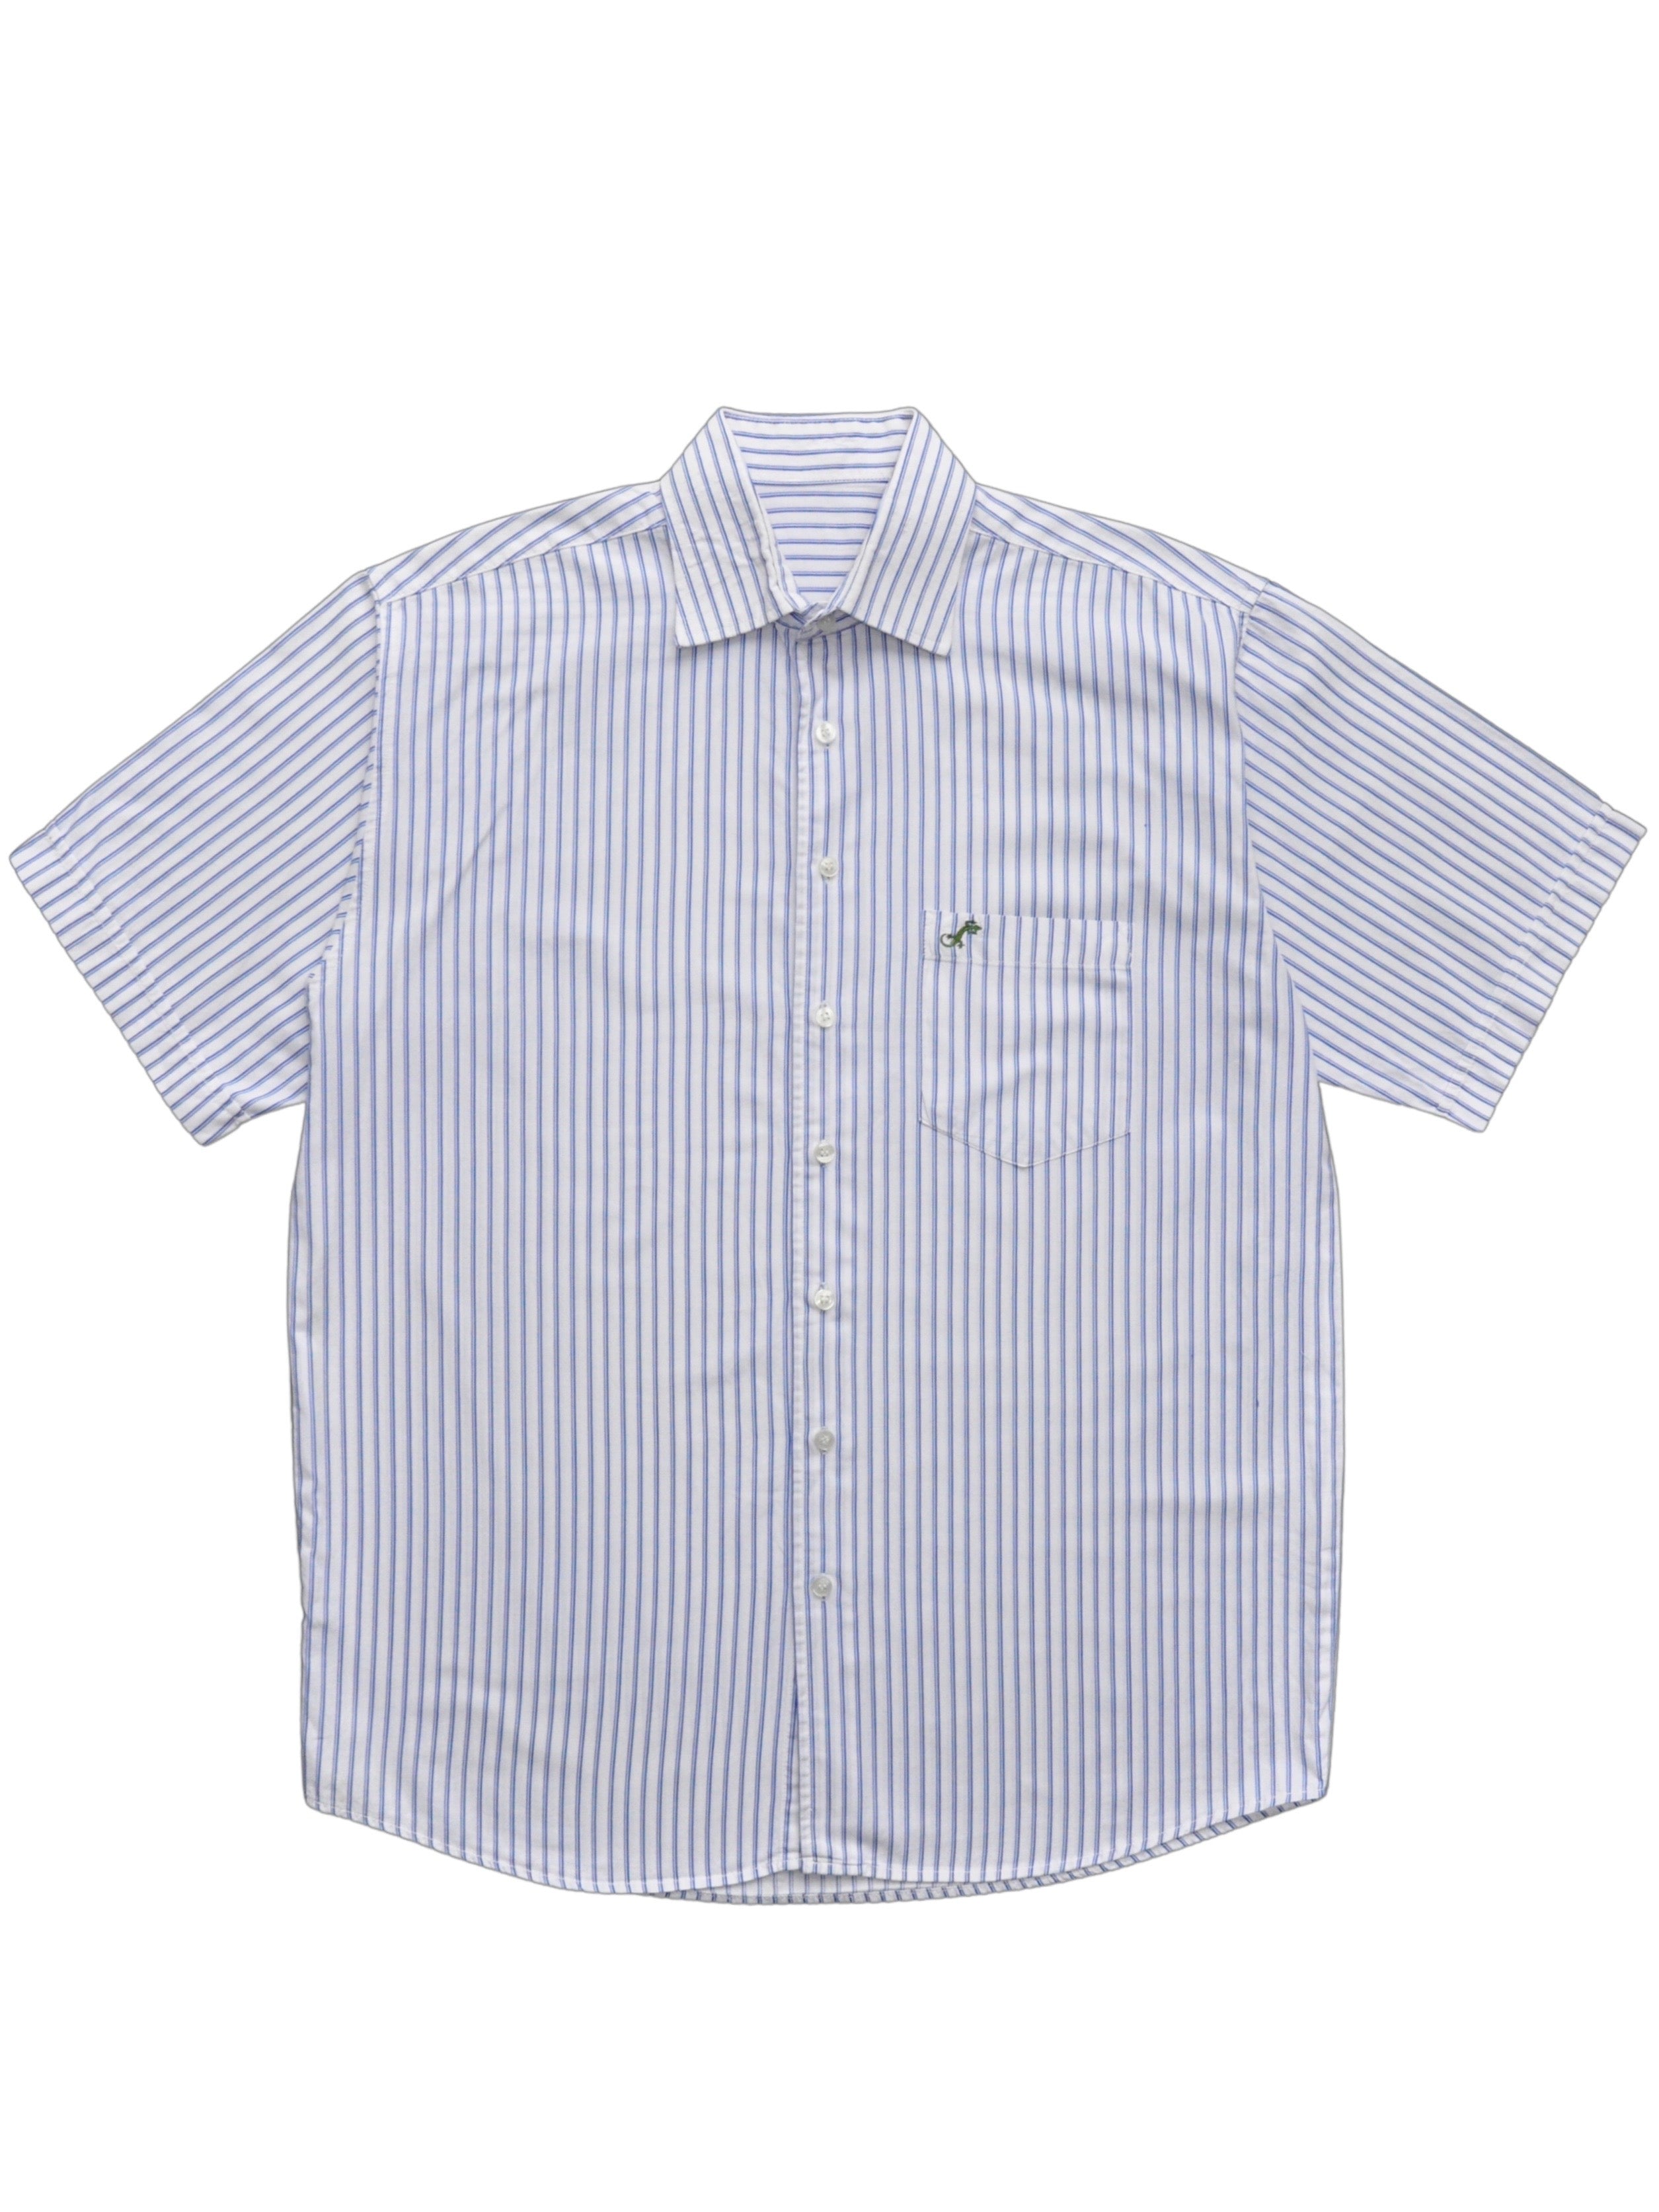 Vintage Stripe Short Sleeve Shirt - Blue